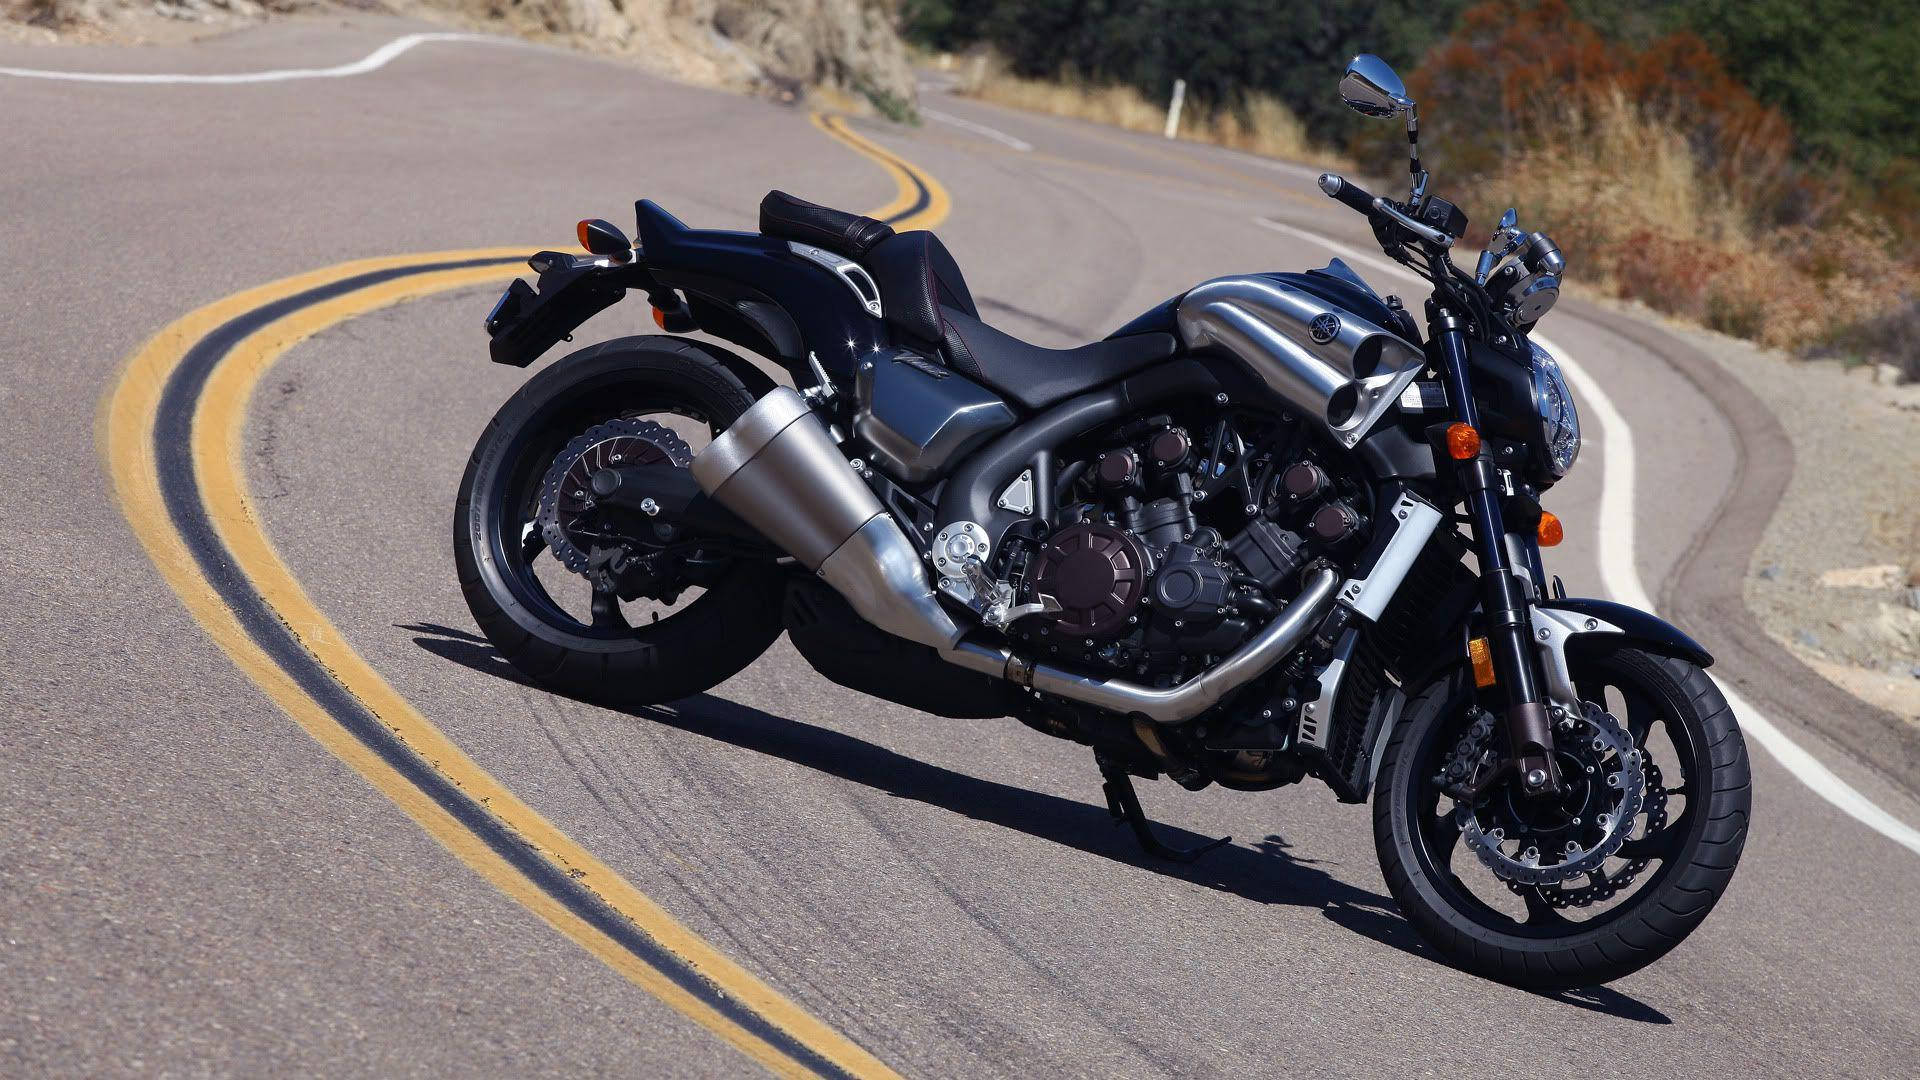 Motocicletanegra Para El Easy Rider Fondo de pantalla